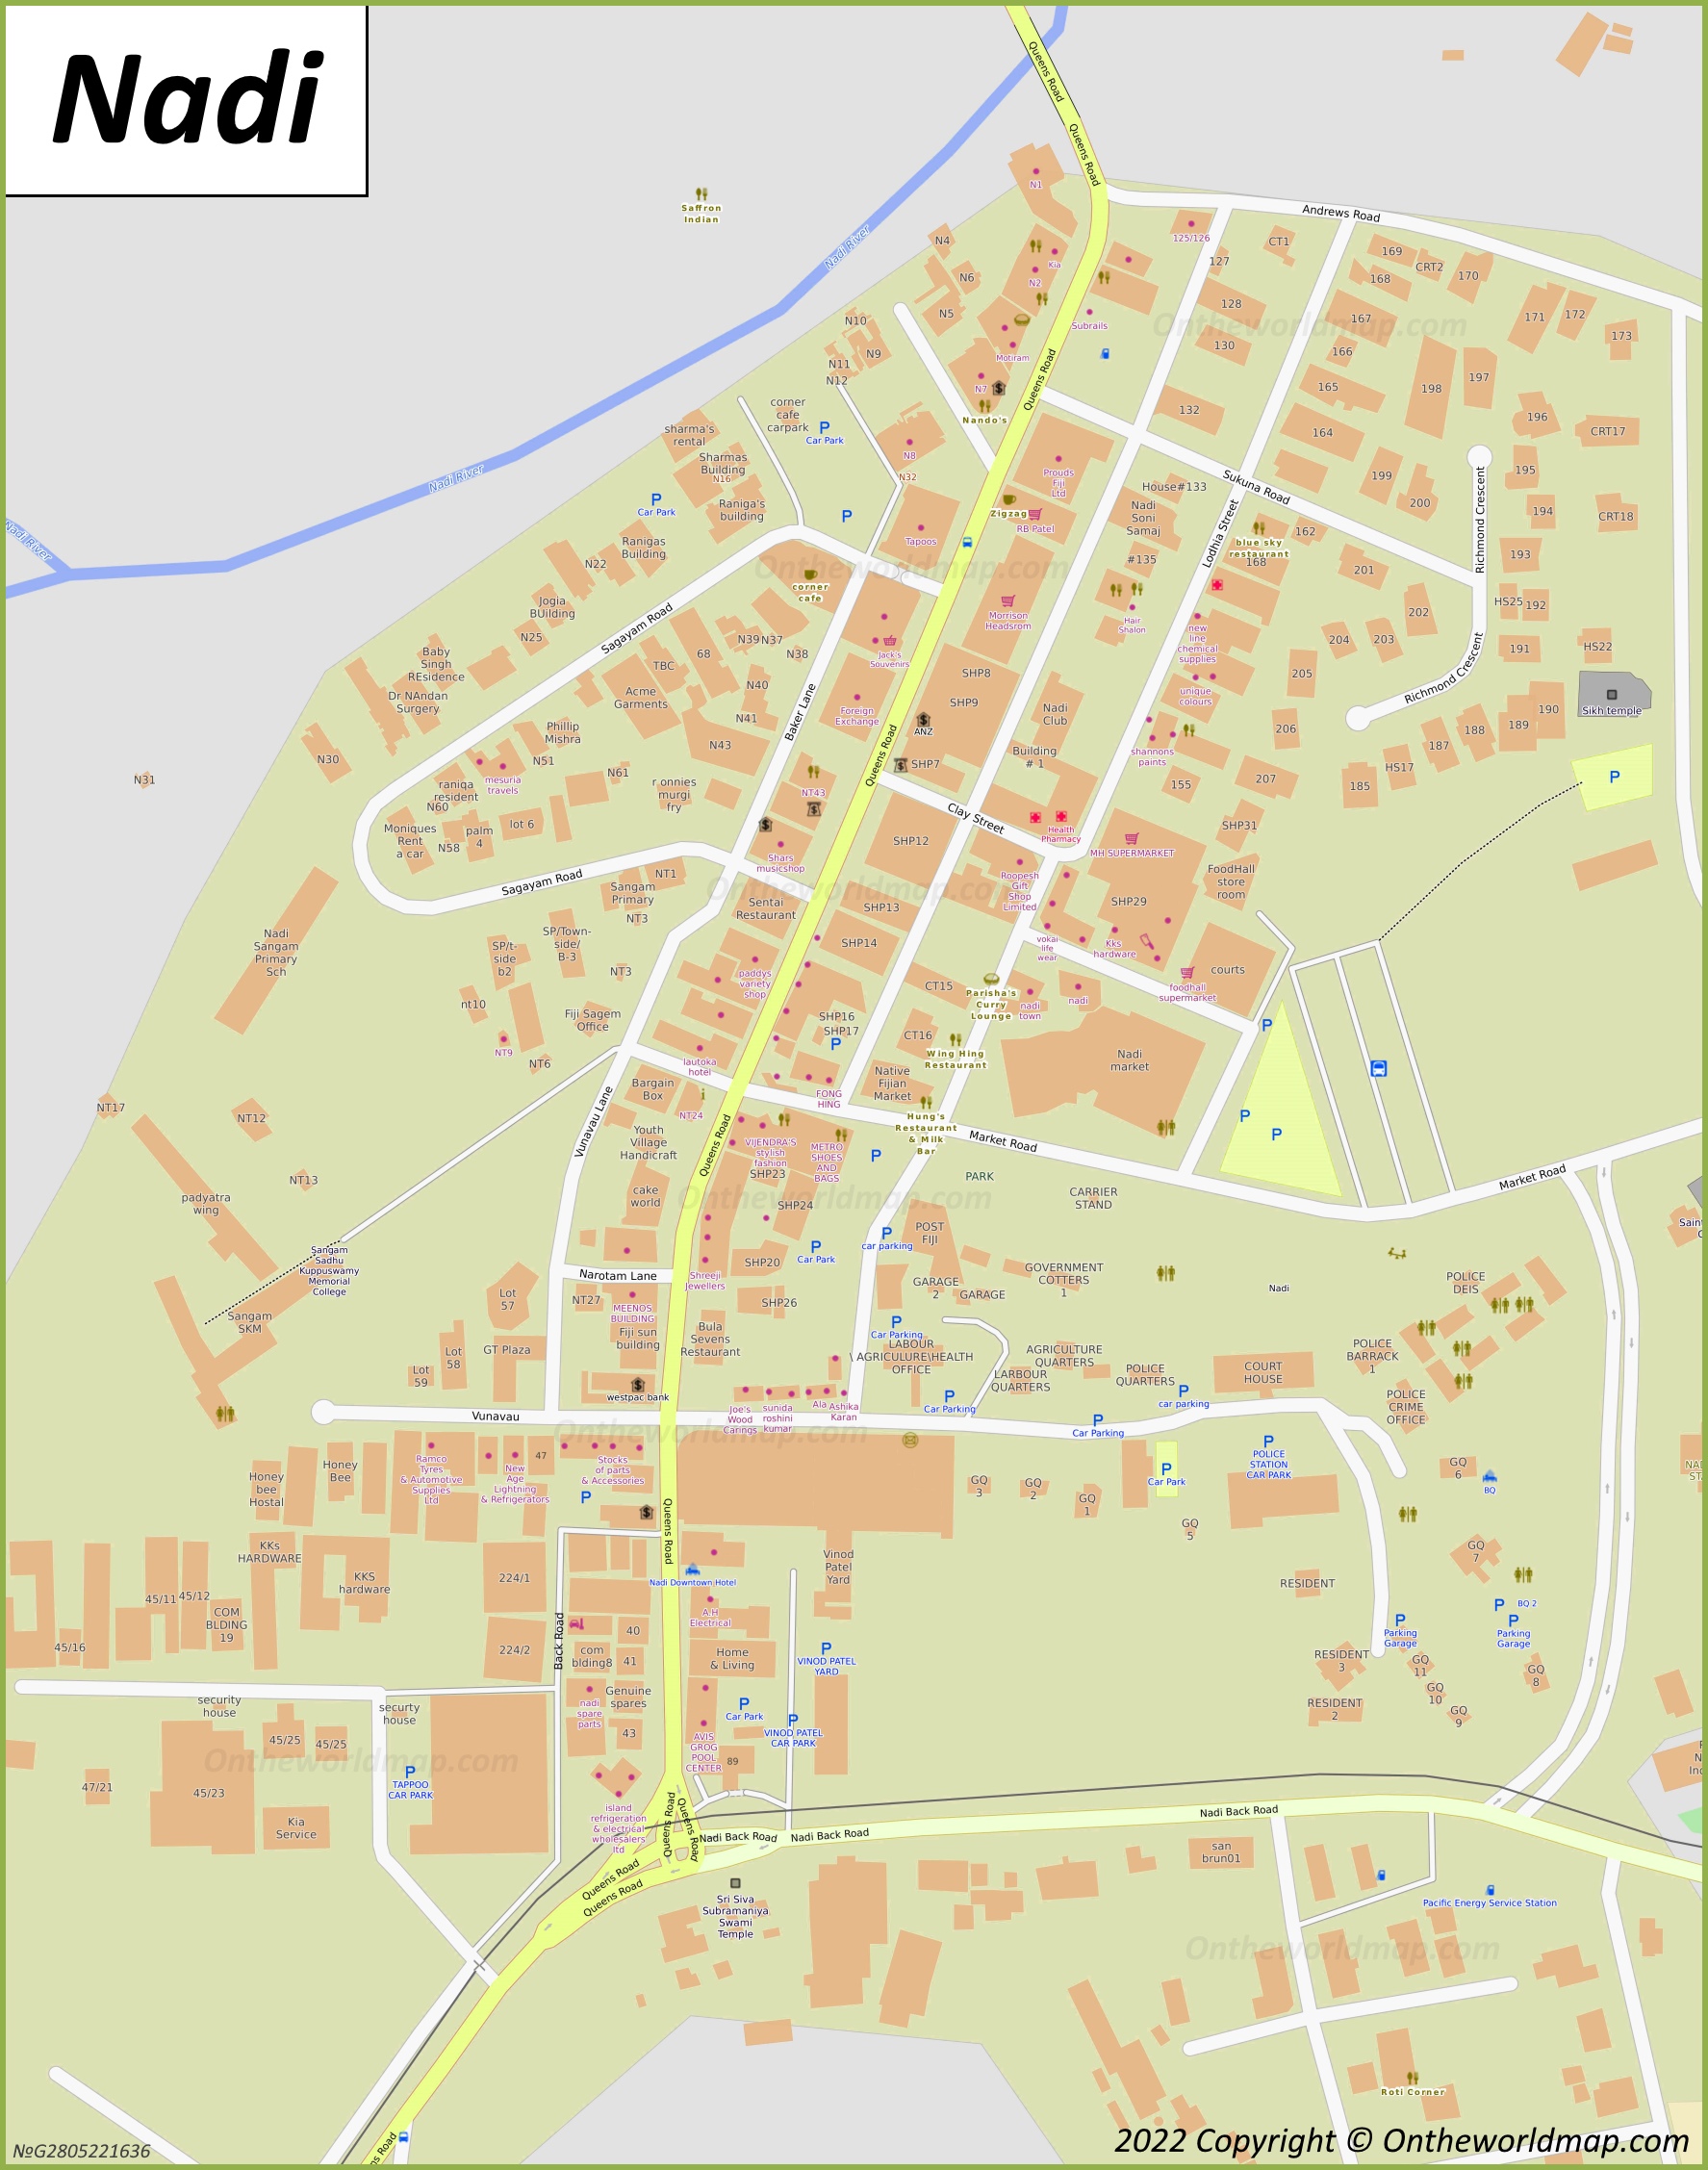 Nadi Town Centre Map